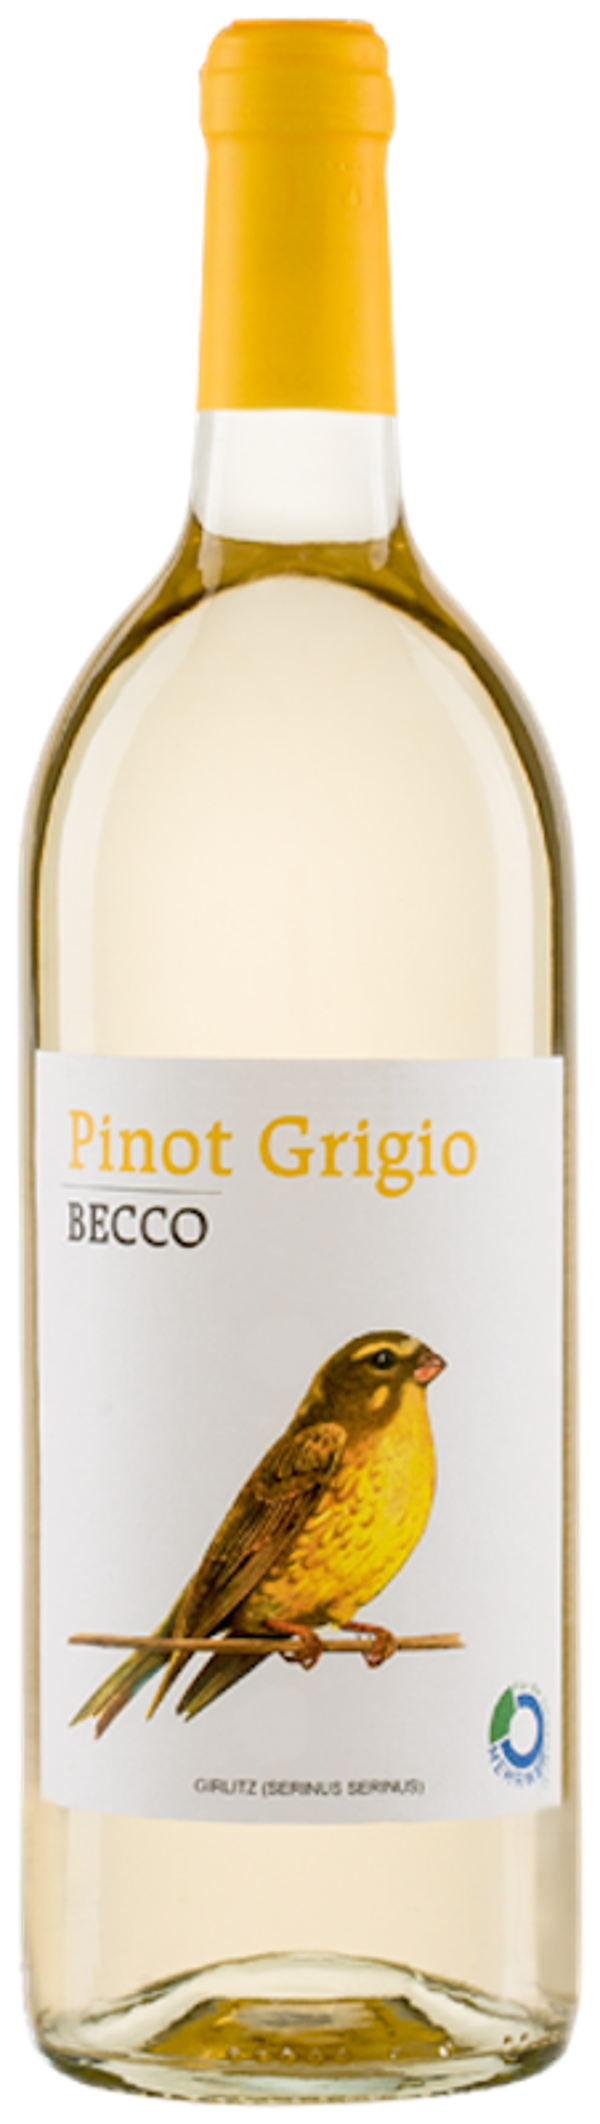 Produktfoto zu Kiste BECCO Pinot Grigio IGT 6*1l